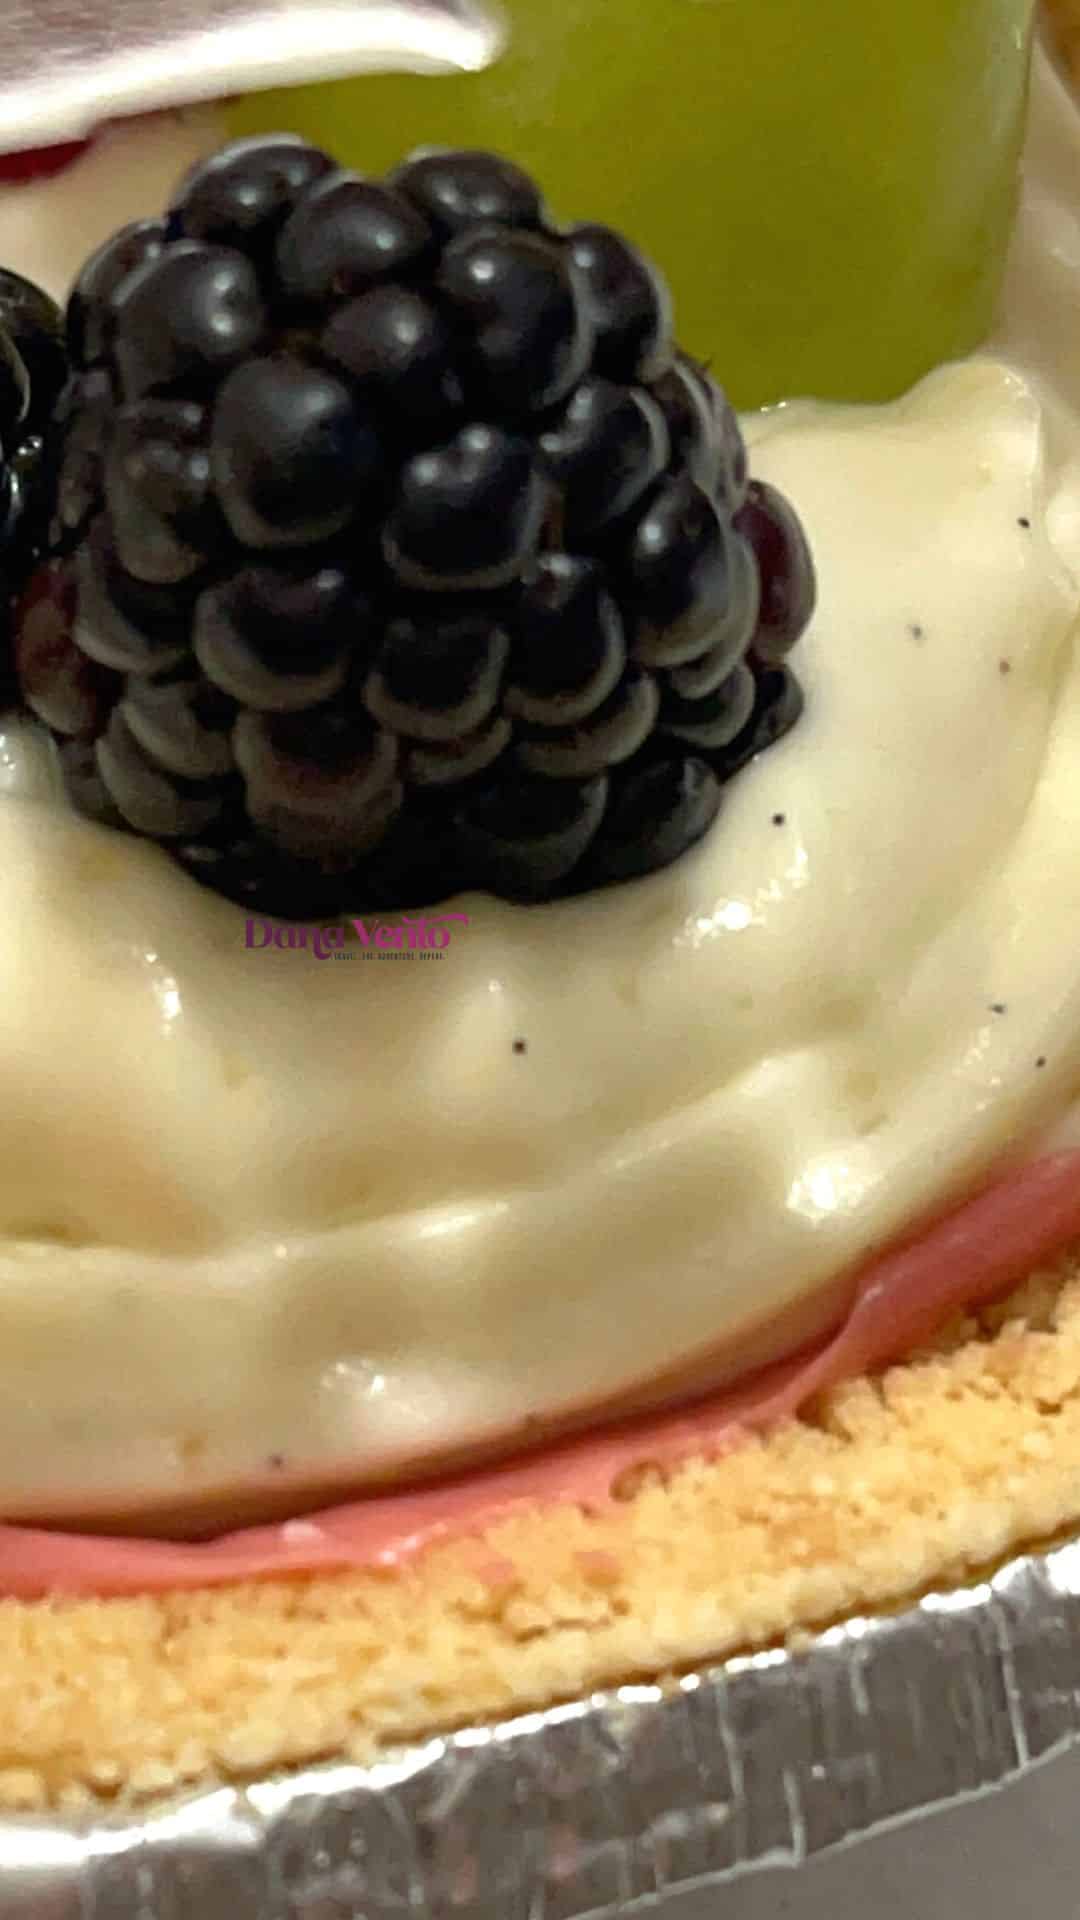 dazzling snow globe cream fruit tarts with vanilla bean paste in the cream filling and blackberries 